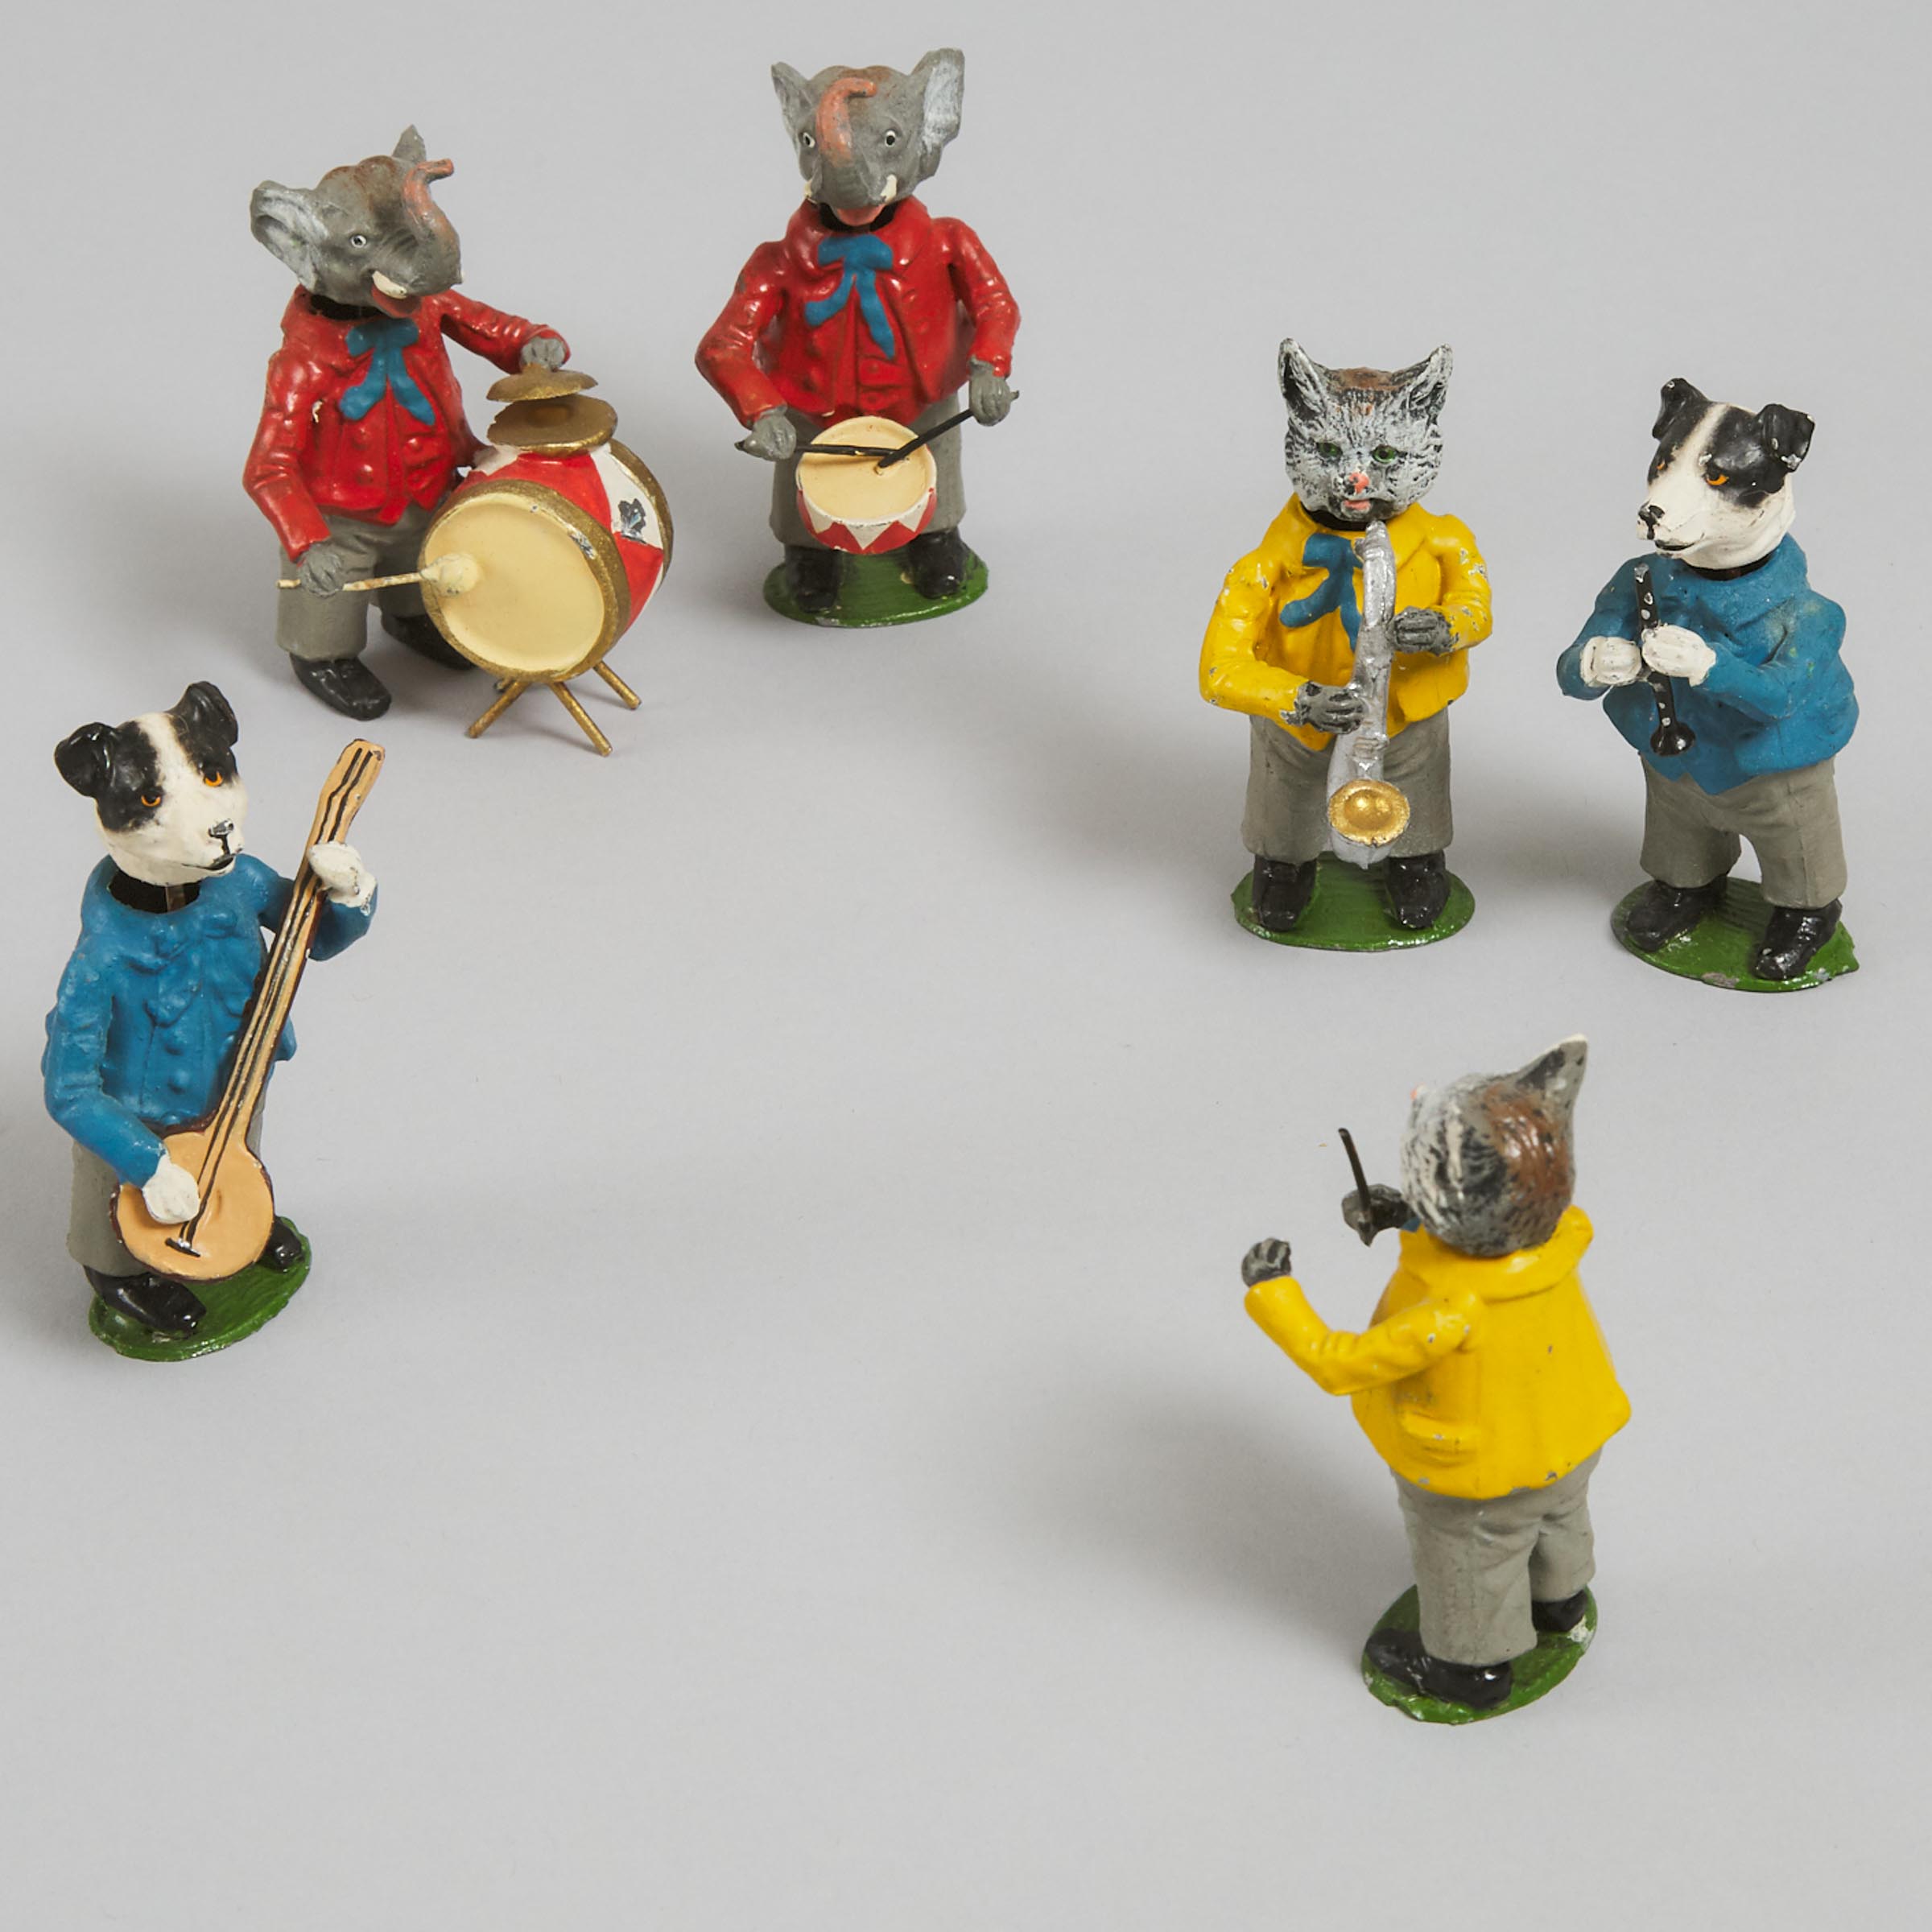 German Six Piece Painted Lead Nodding Head Animal Band, early-mid 20th century